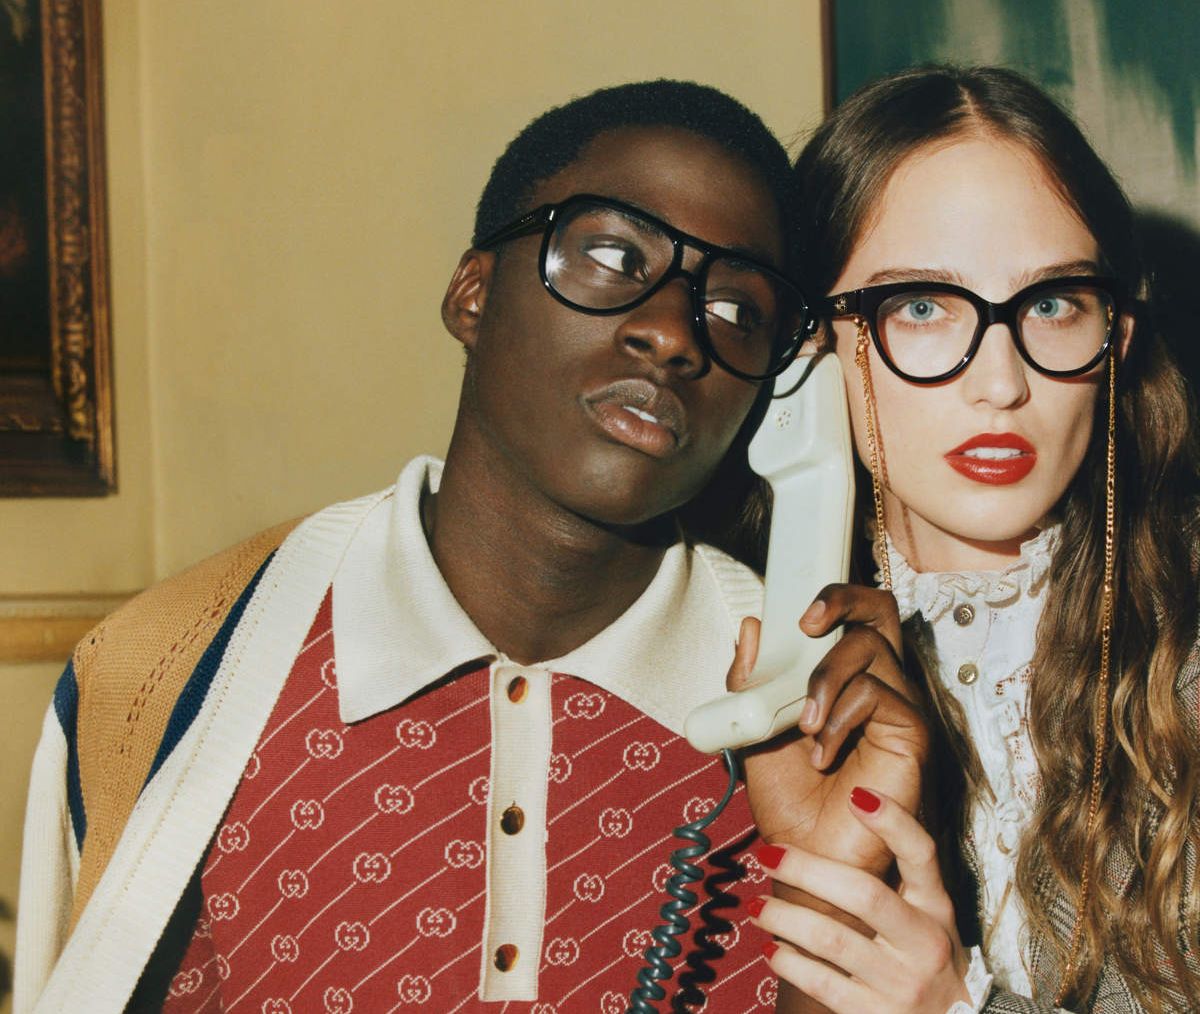 Gucci Presents Its New Fall Winter 2021-22 Eyewear Campaign